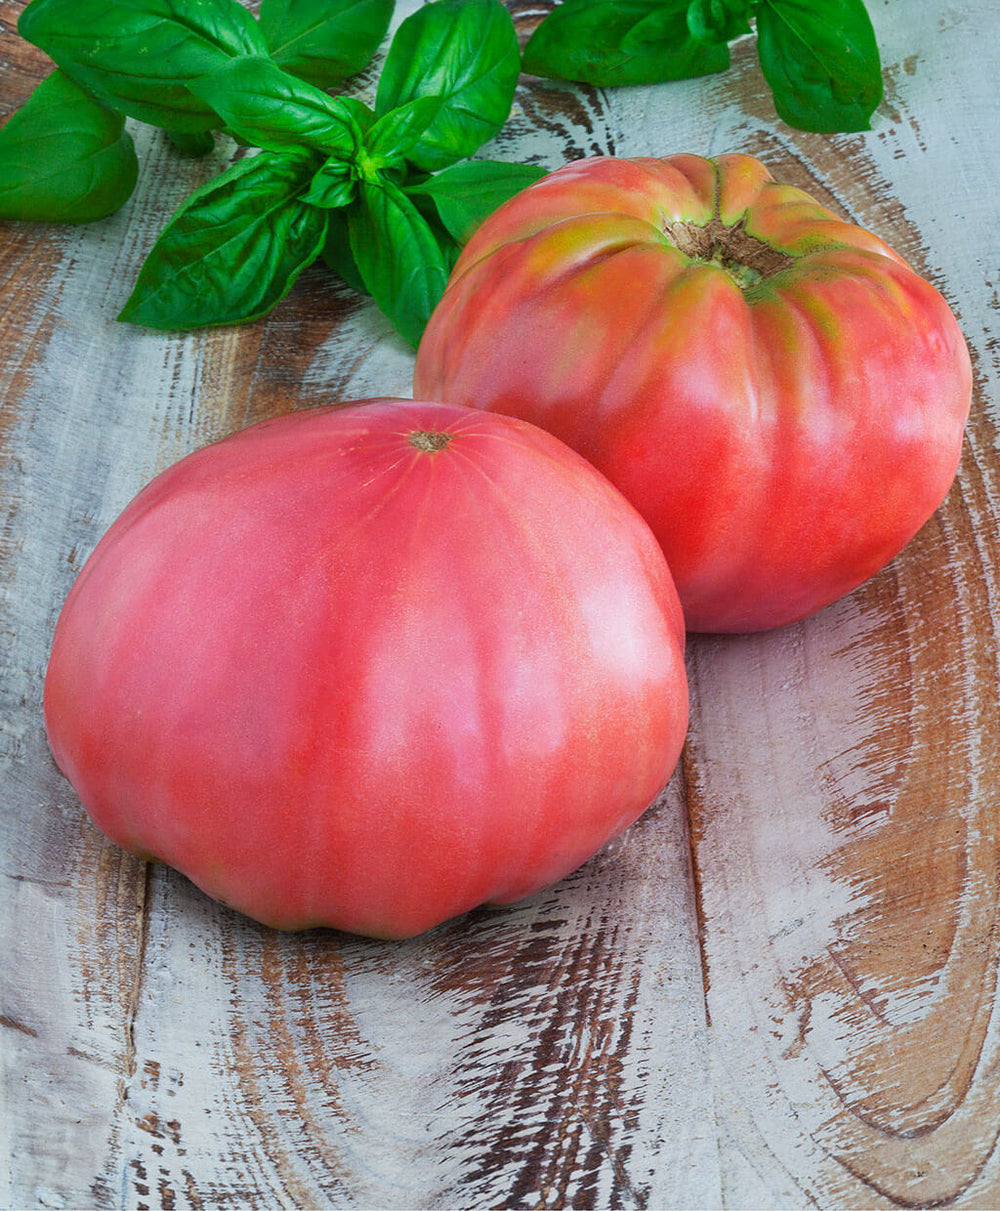 Tomato - Brandywine Pink